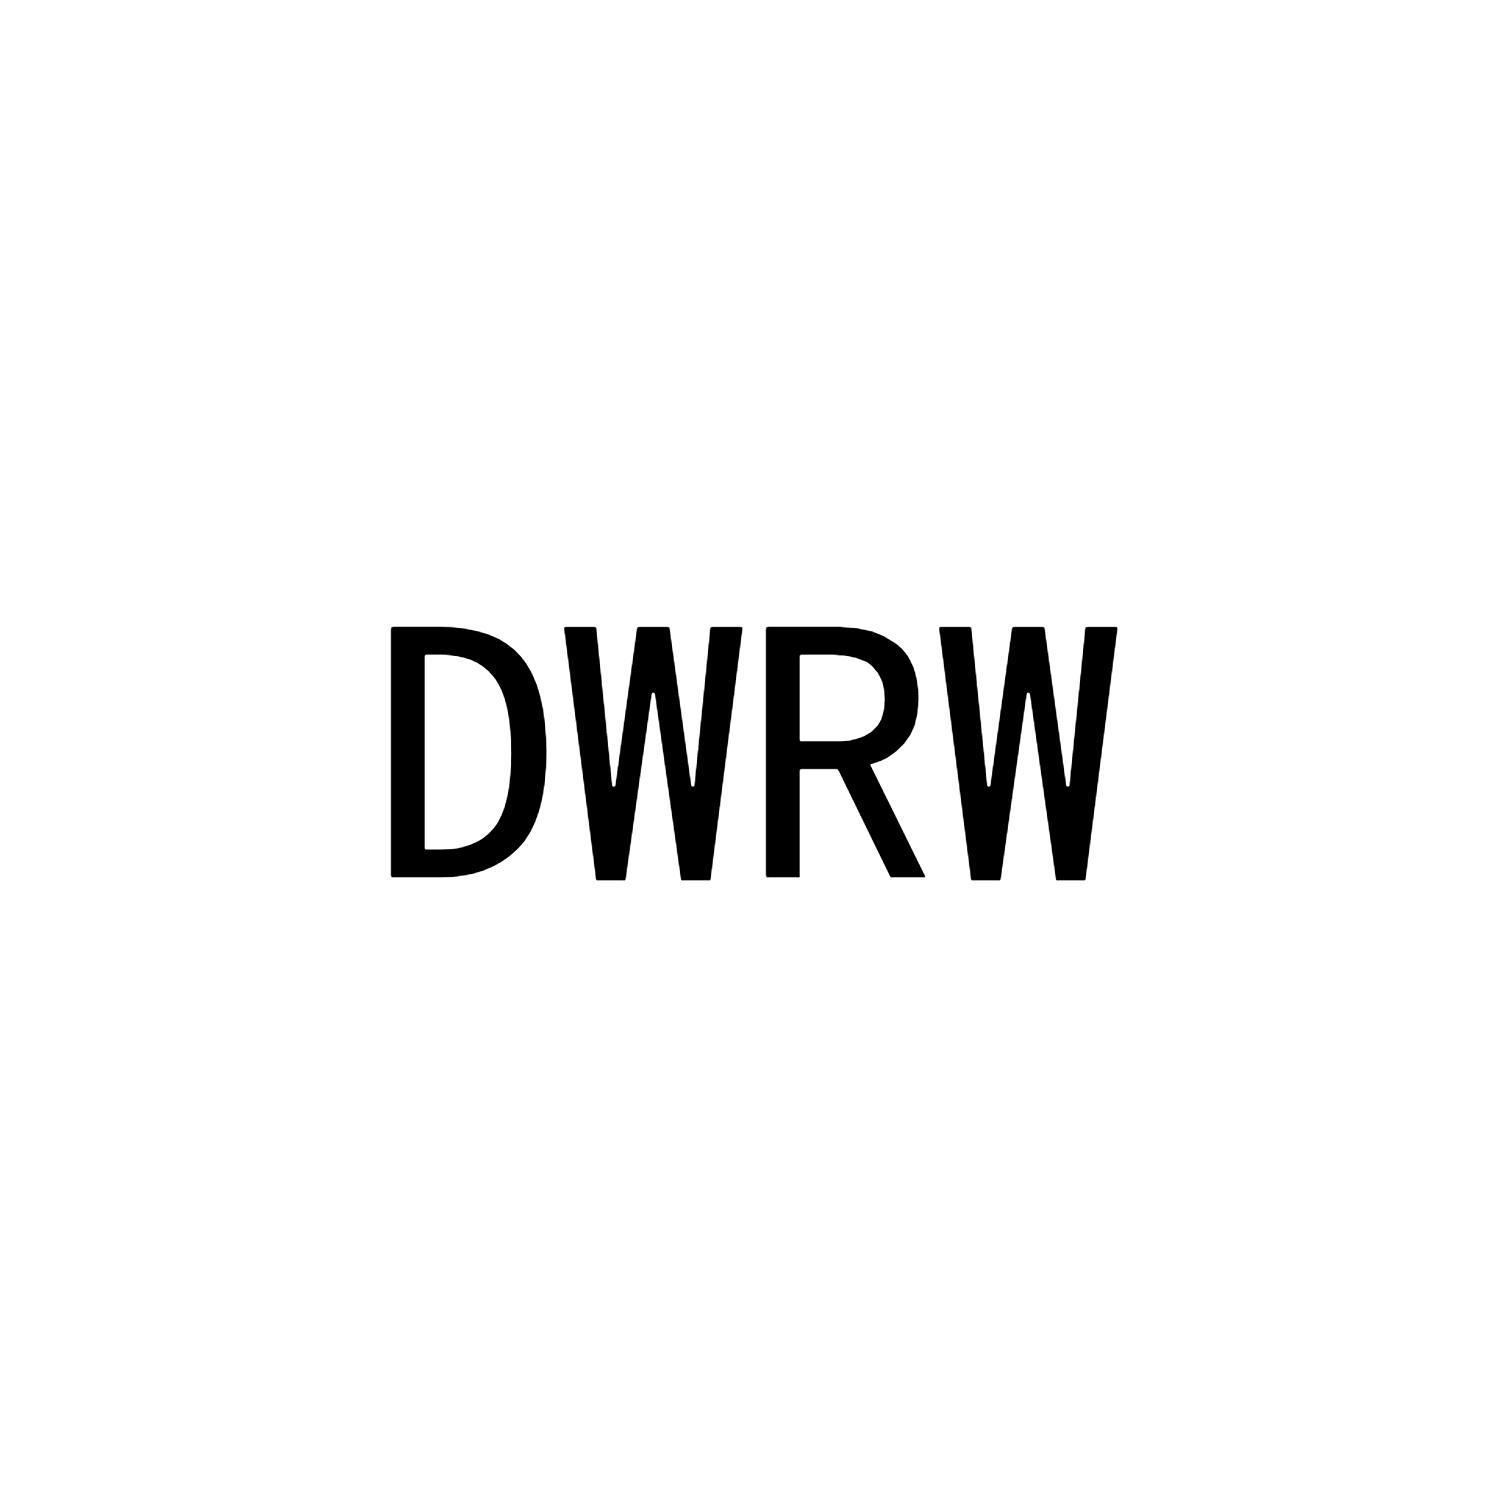 DWRW